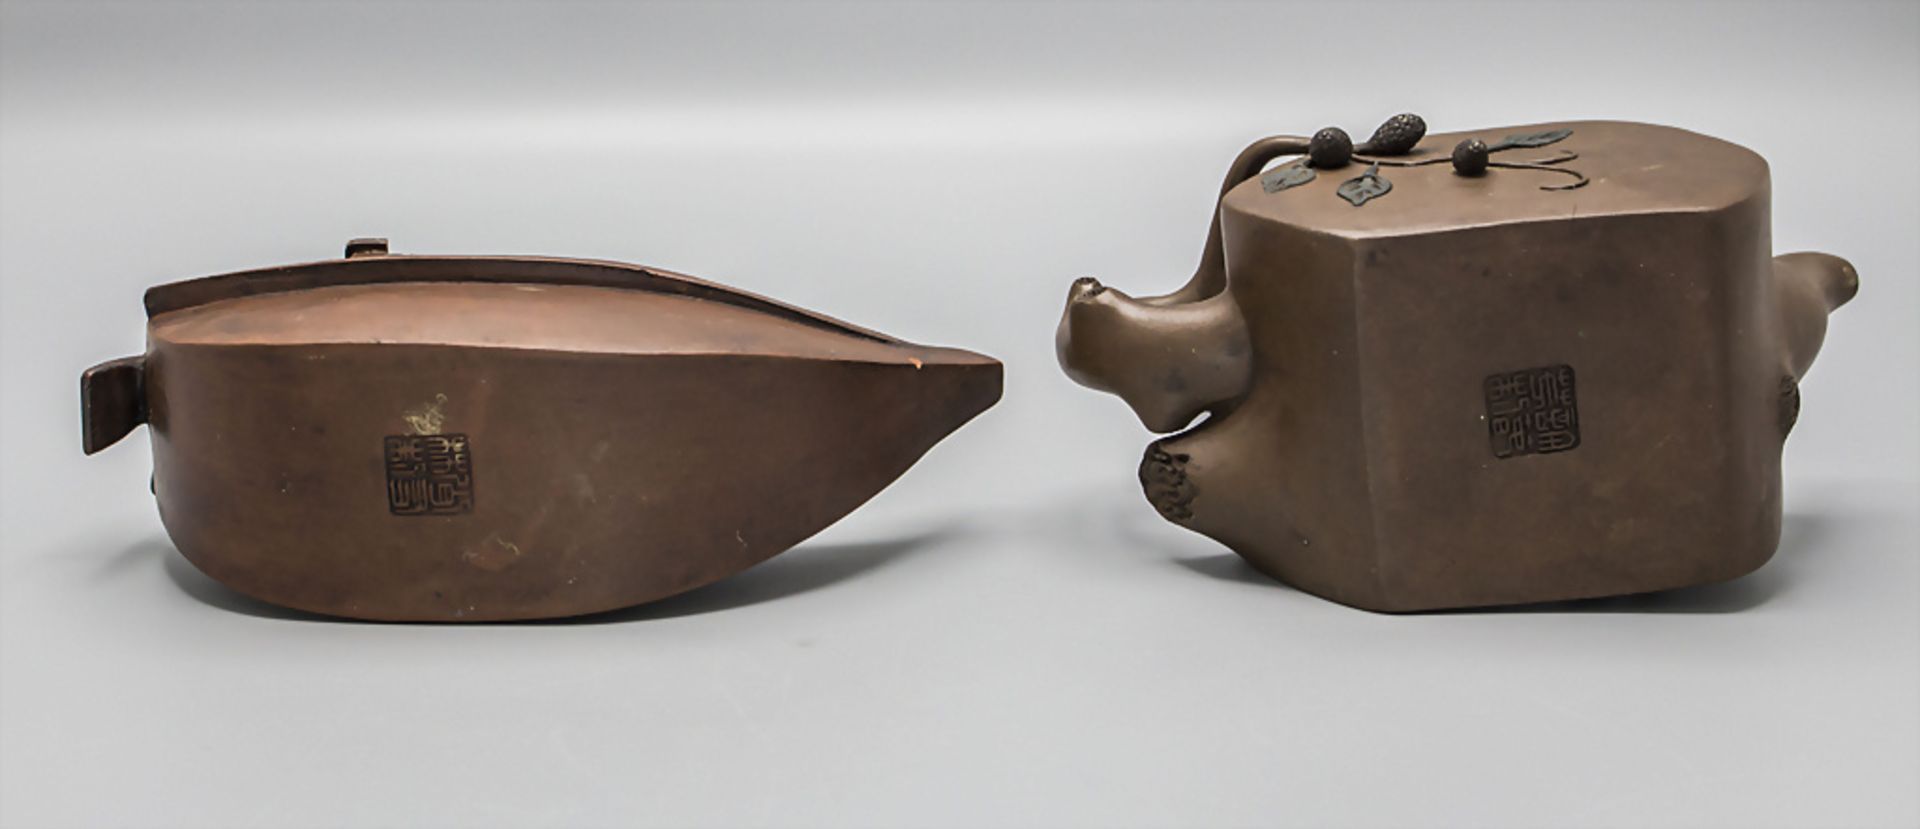 Zwei Teekännchen / Two ceramic teapots, China, 20. Jh. - Image 4 of 10